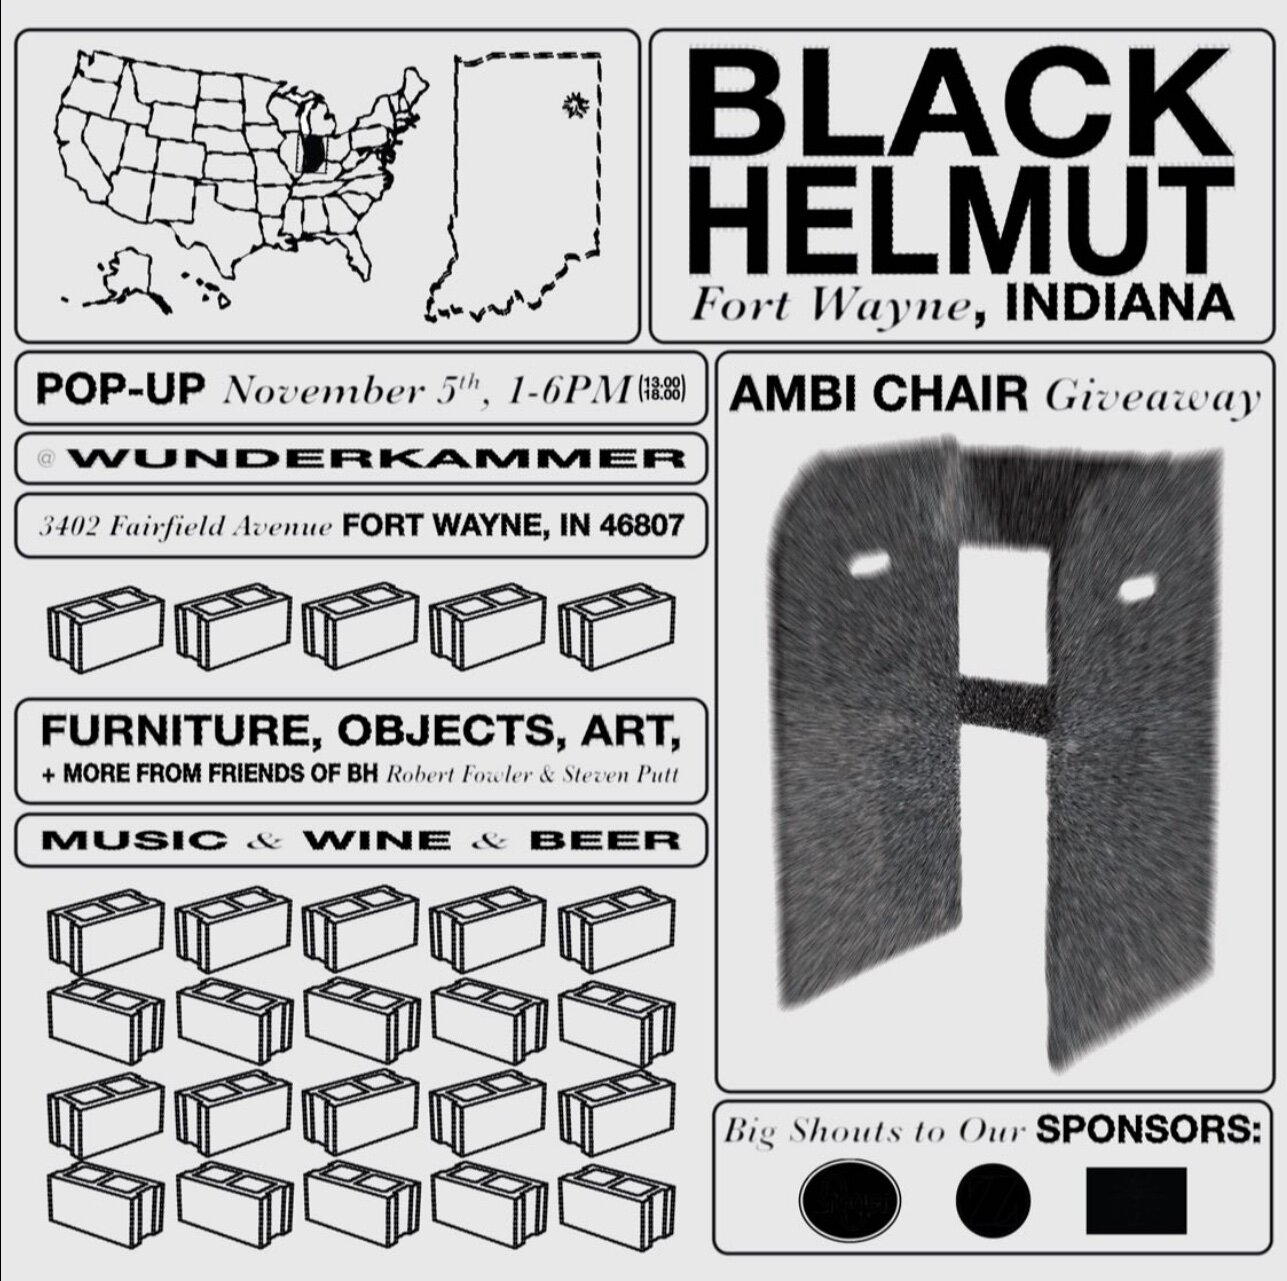 Black Helmut's Pop Up Event